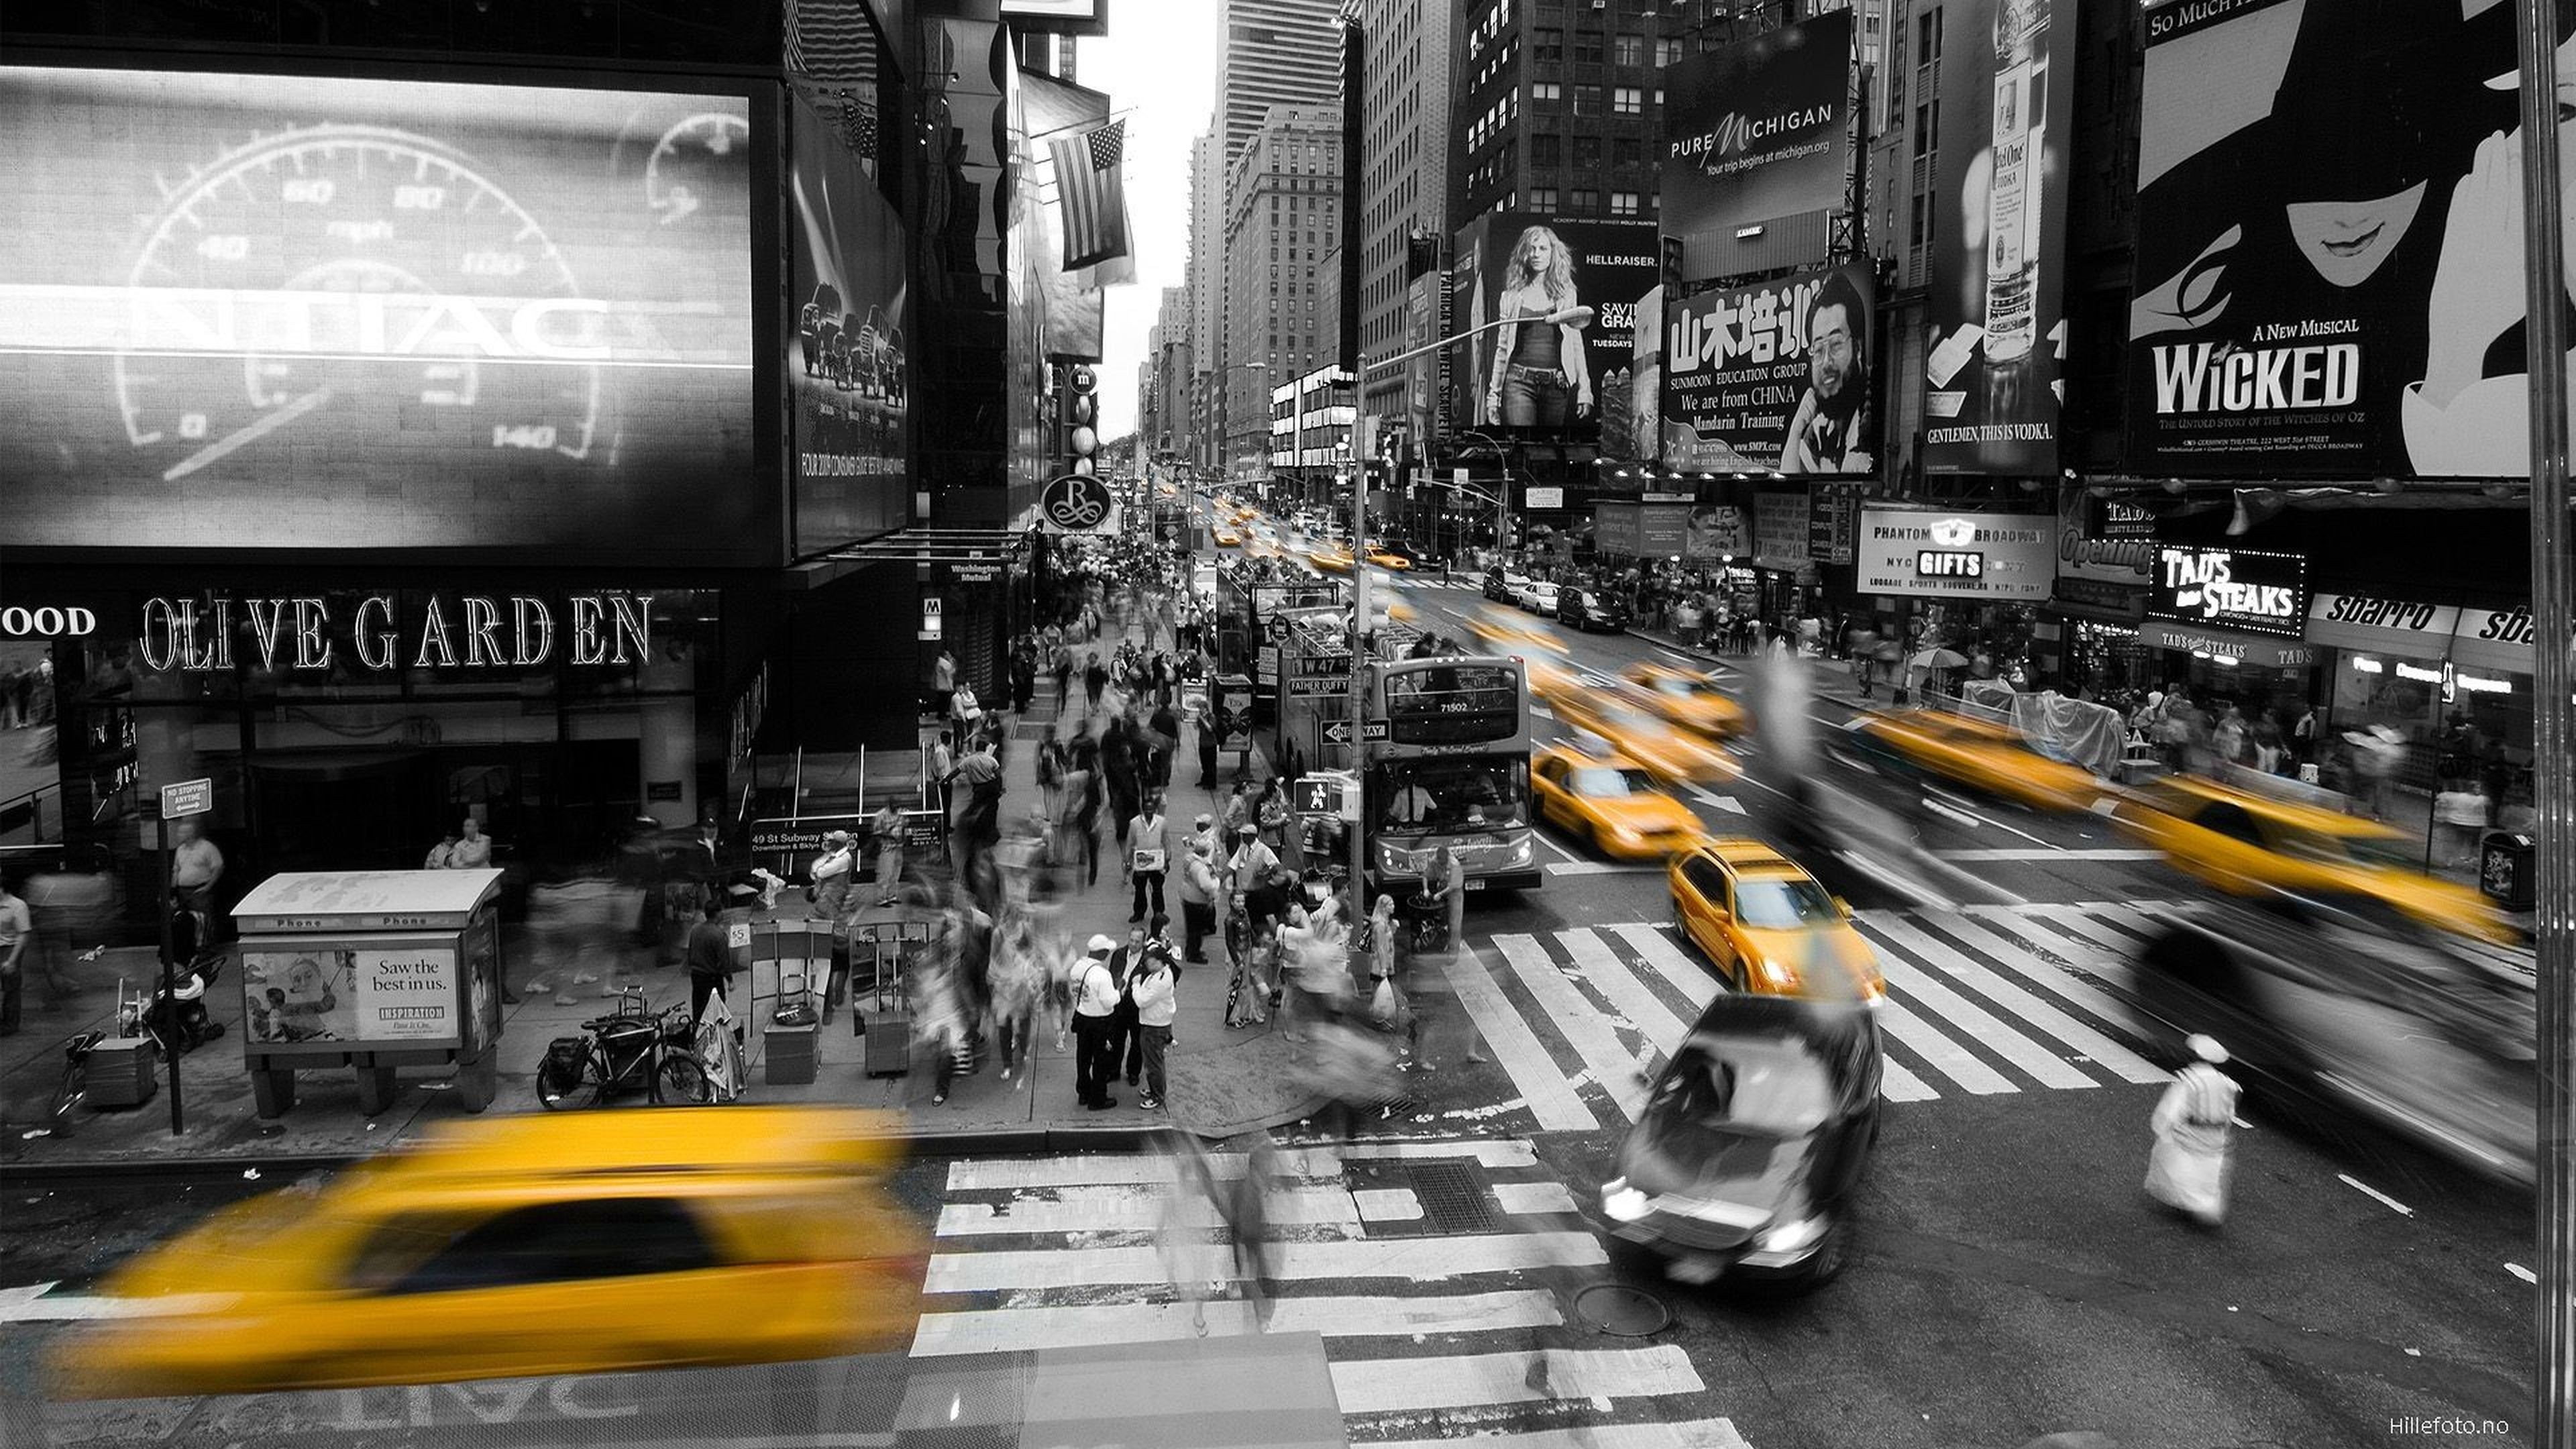 New York Taxi Popular Image Ftj